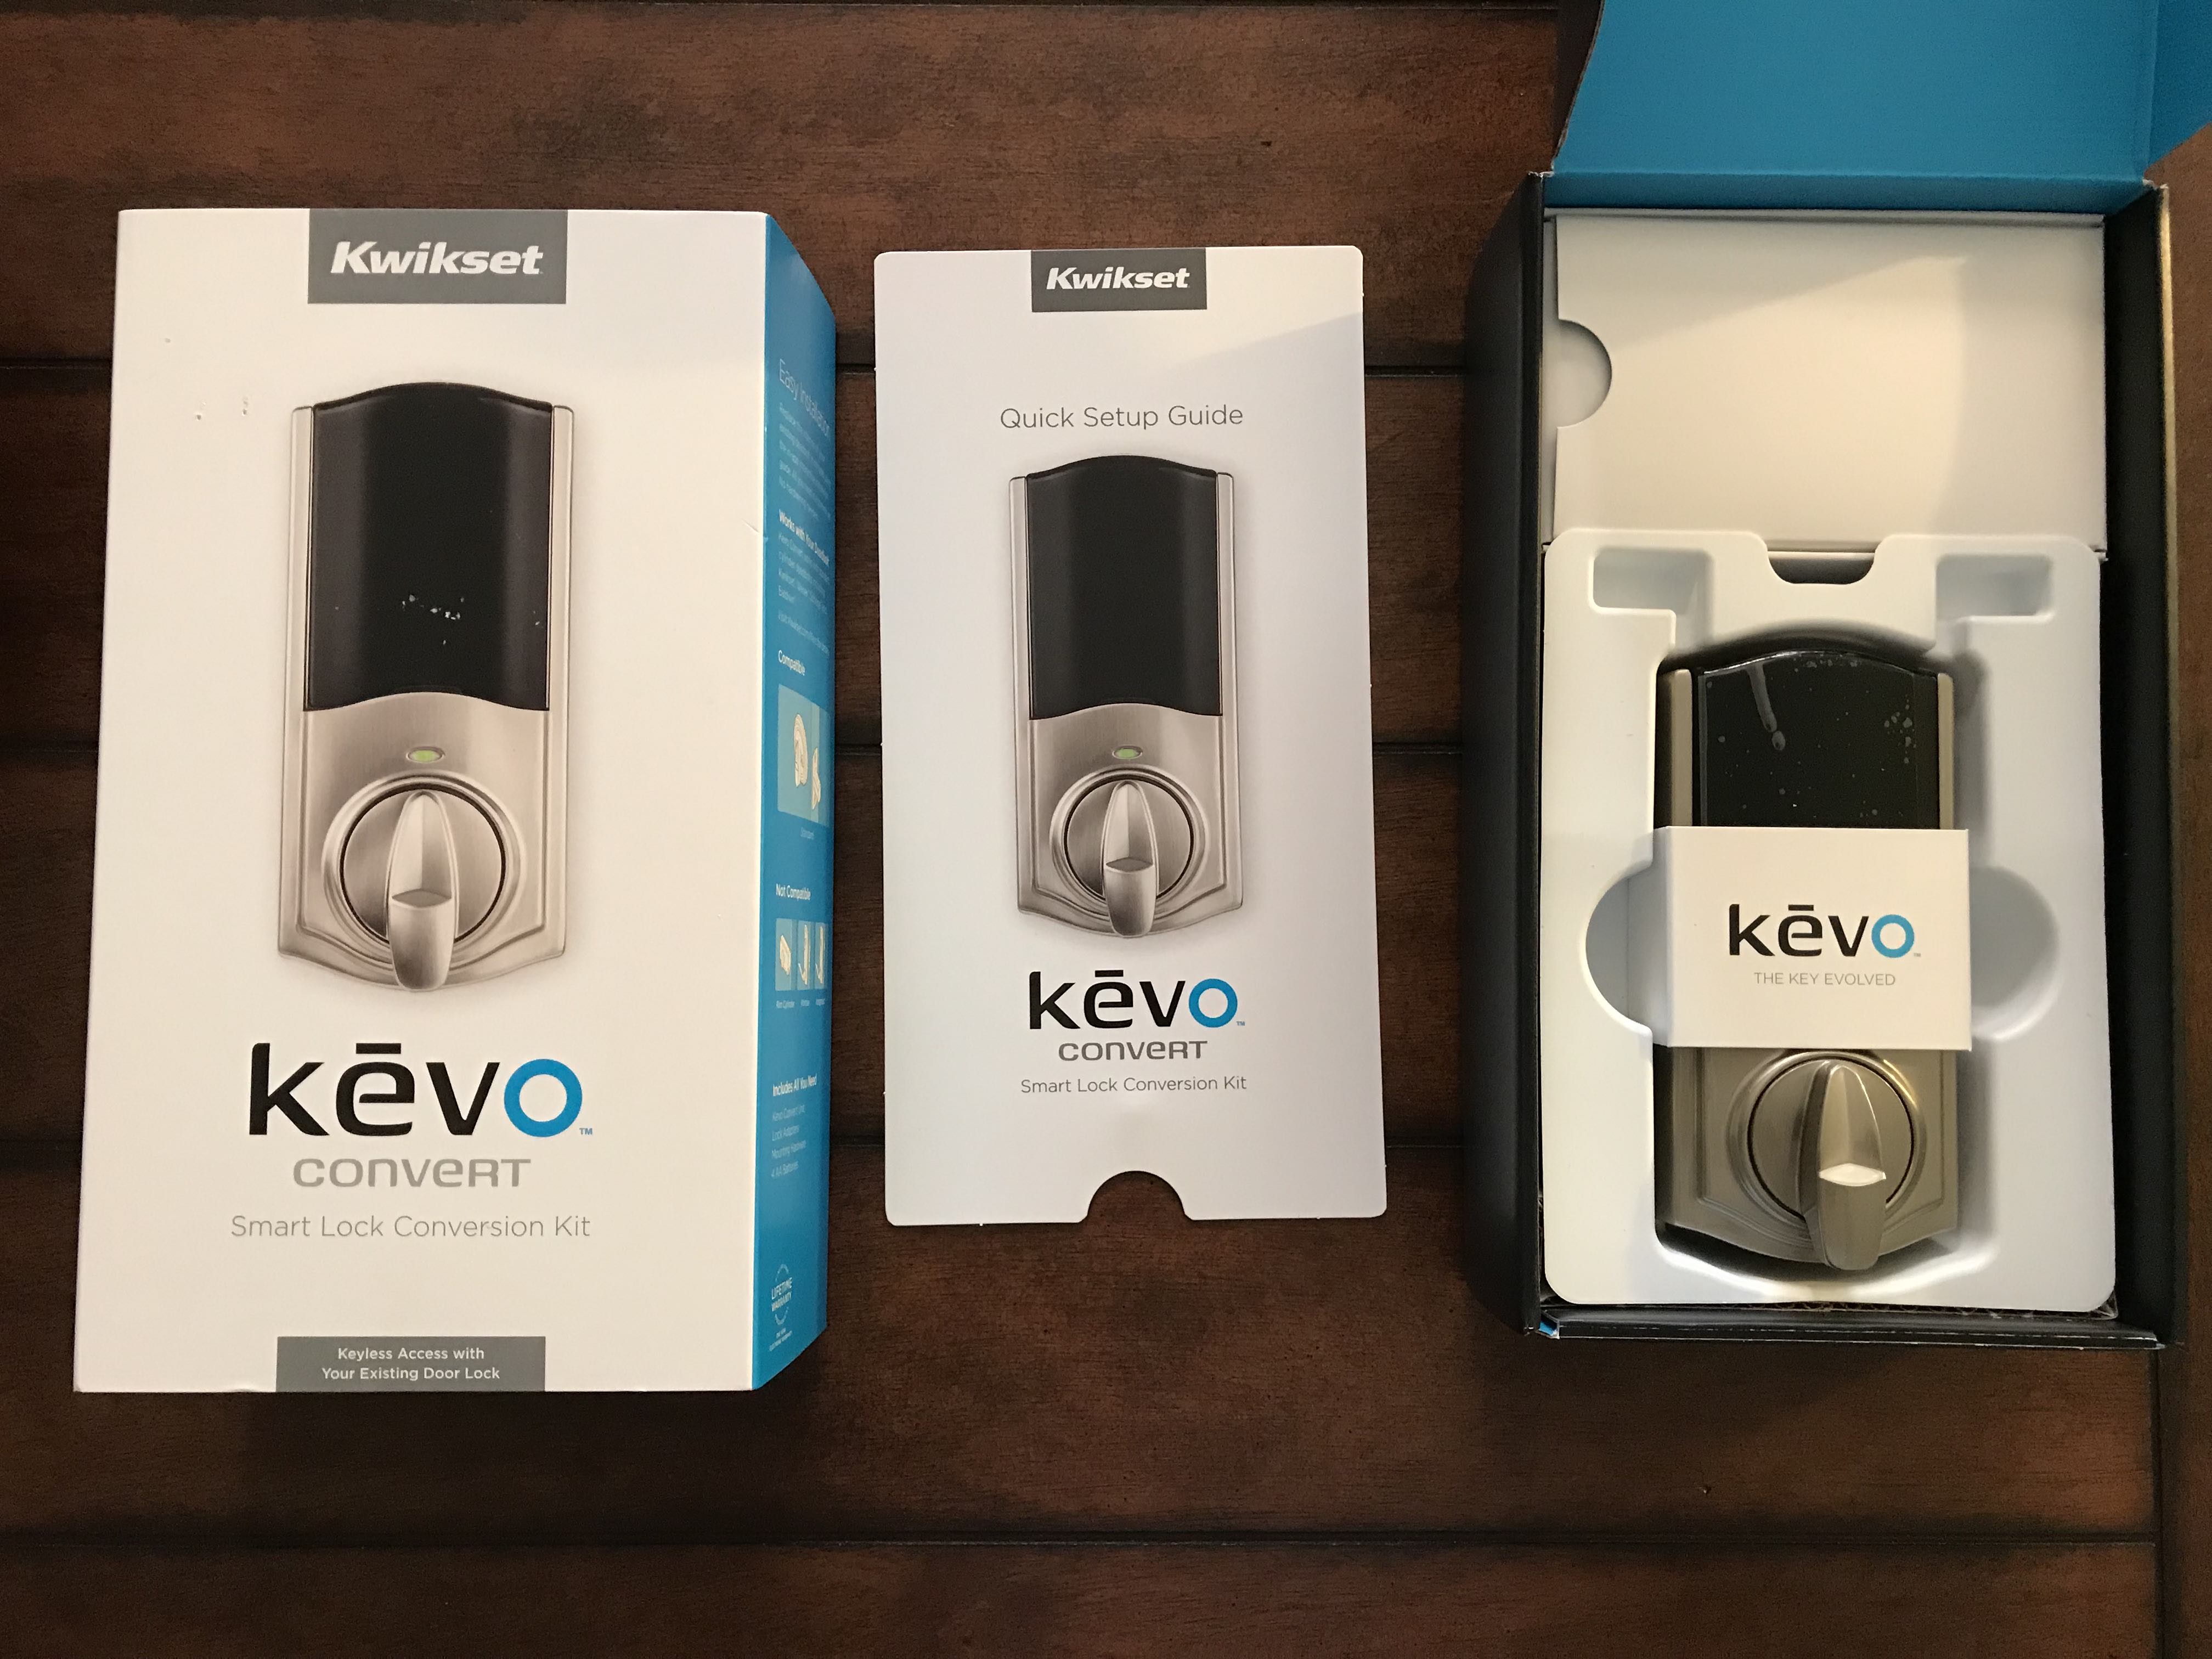 Next Generation Hardware Wallet – Keevo